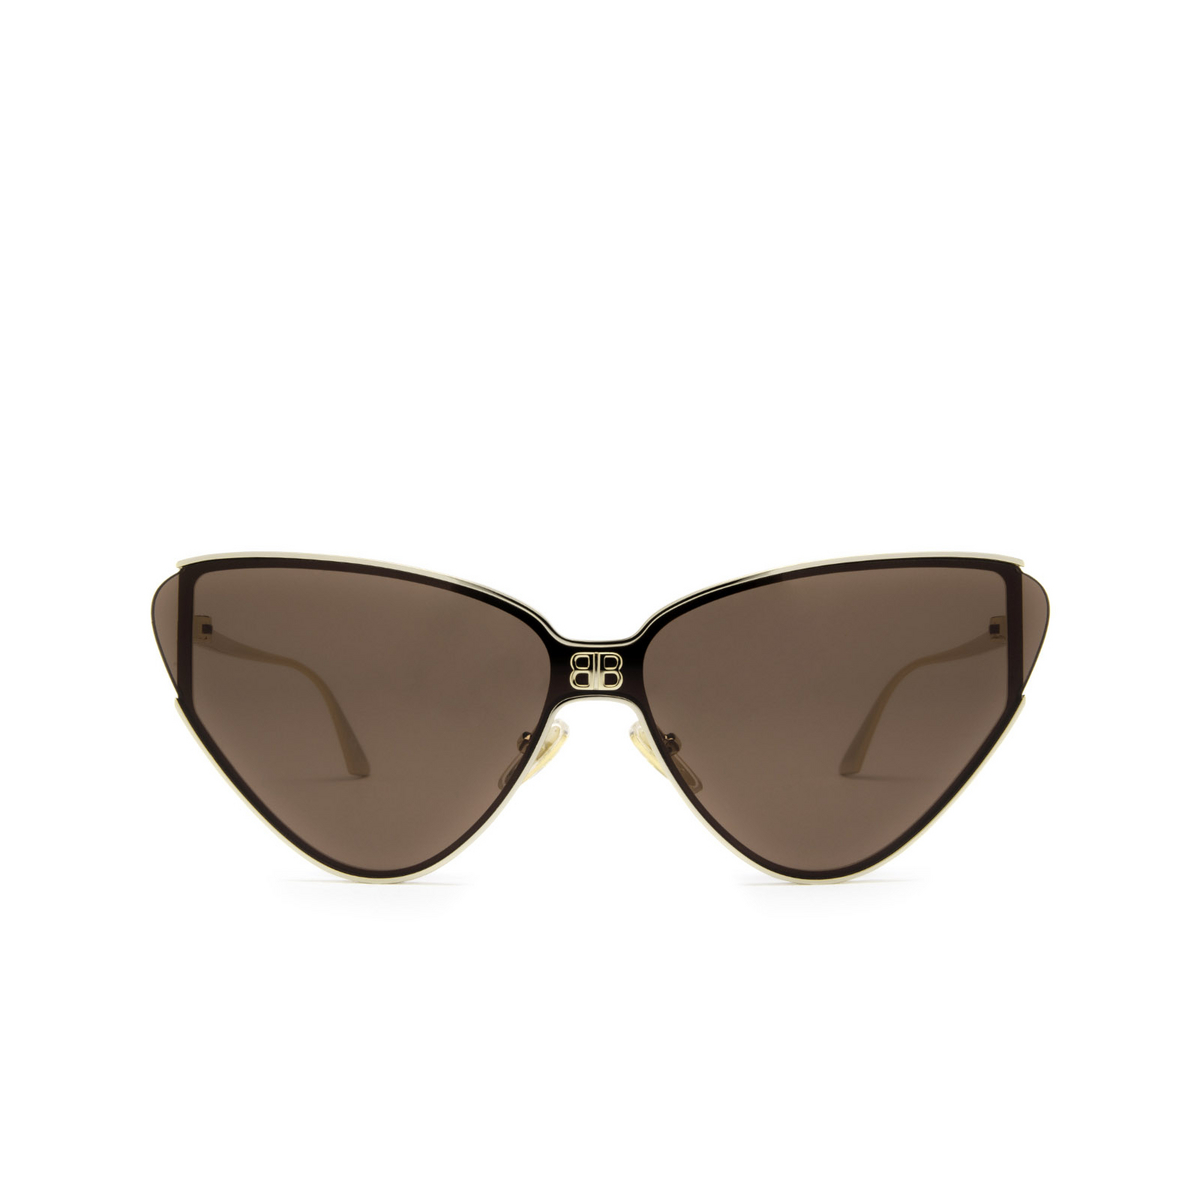 Balenciaga® Cat-eye Sunglasses: BB0191S color Gold 002 - front view.